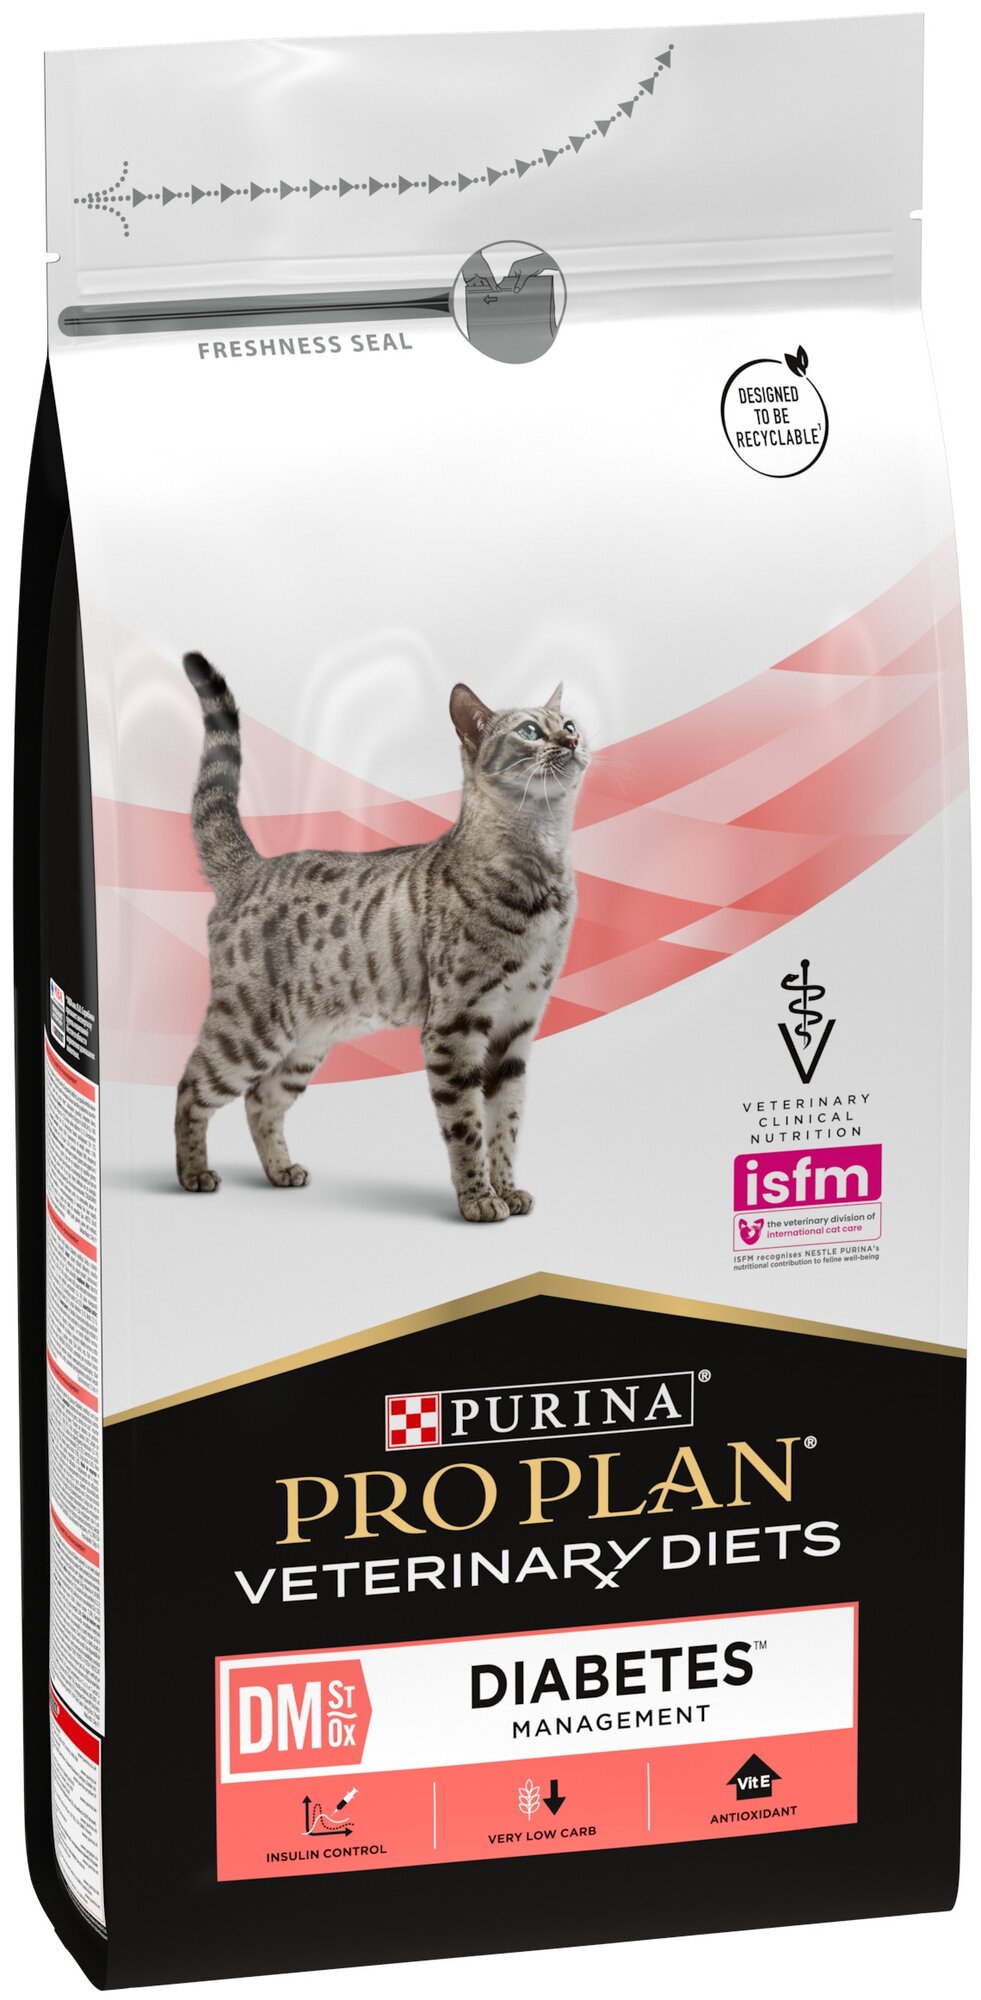 Сухой корм Pro Plan Veterinary diets DM корм для кошек при диабете, Пакет, 1,5 кг - фотография № 6